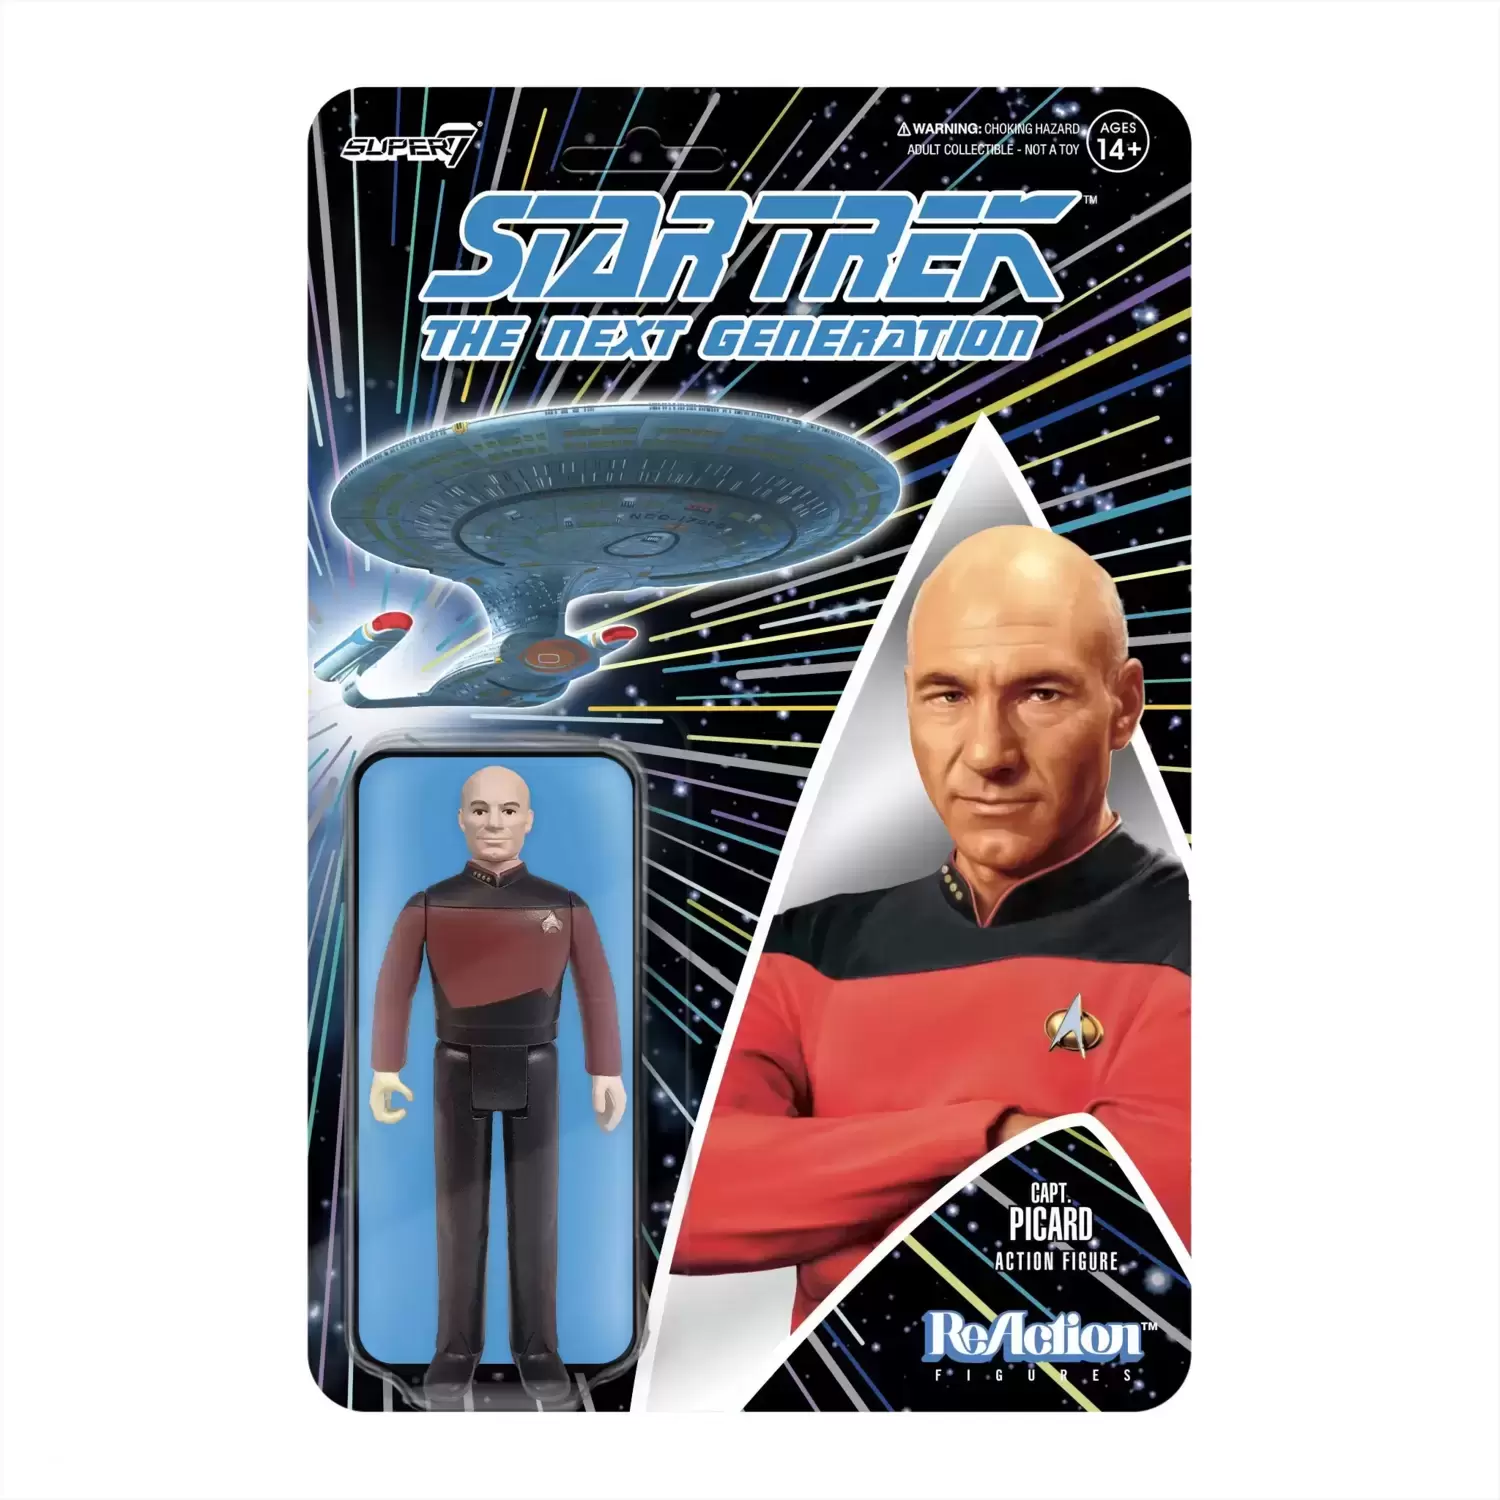 ReAction Figures - Star Trek The Next Generation - Capt. Picard